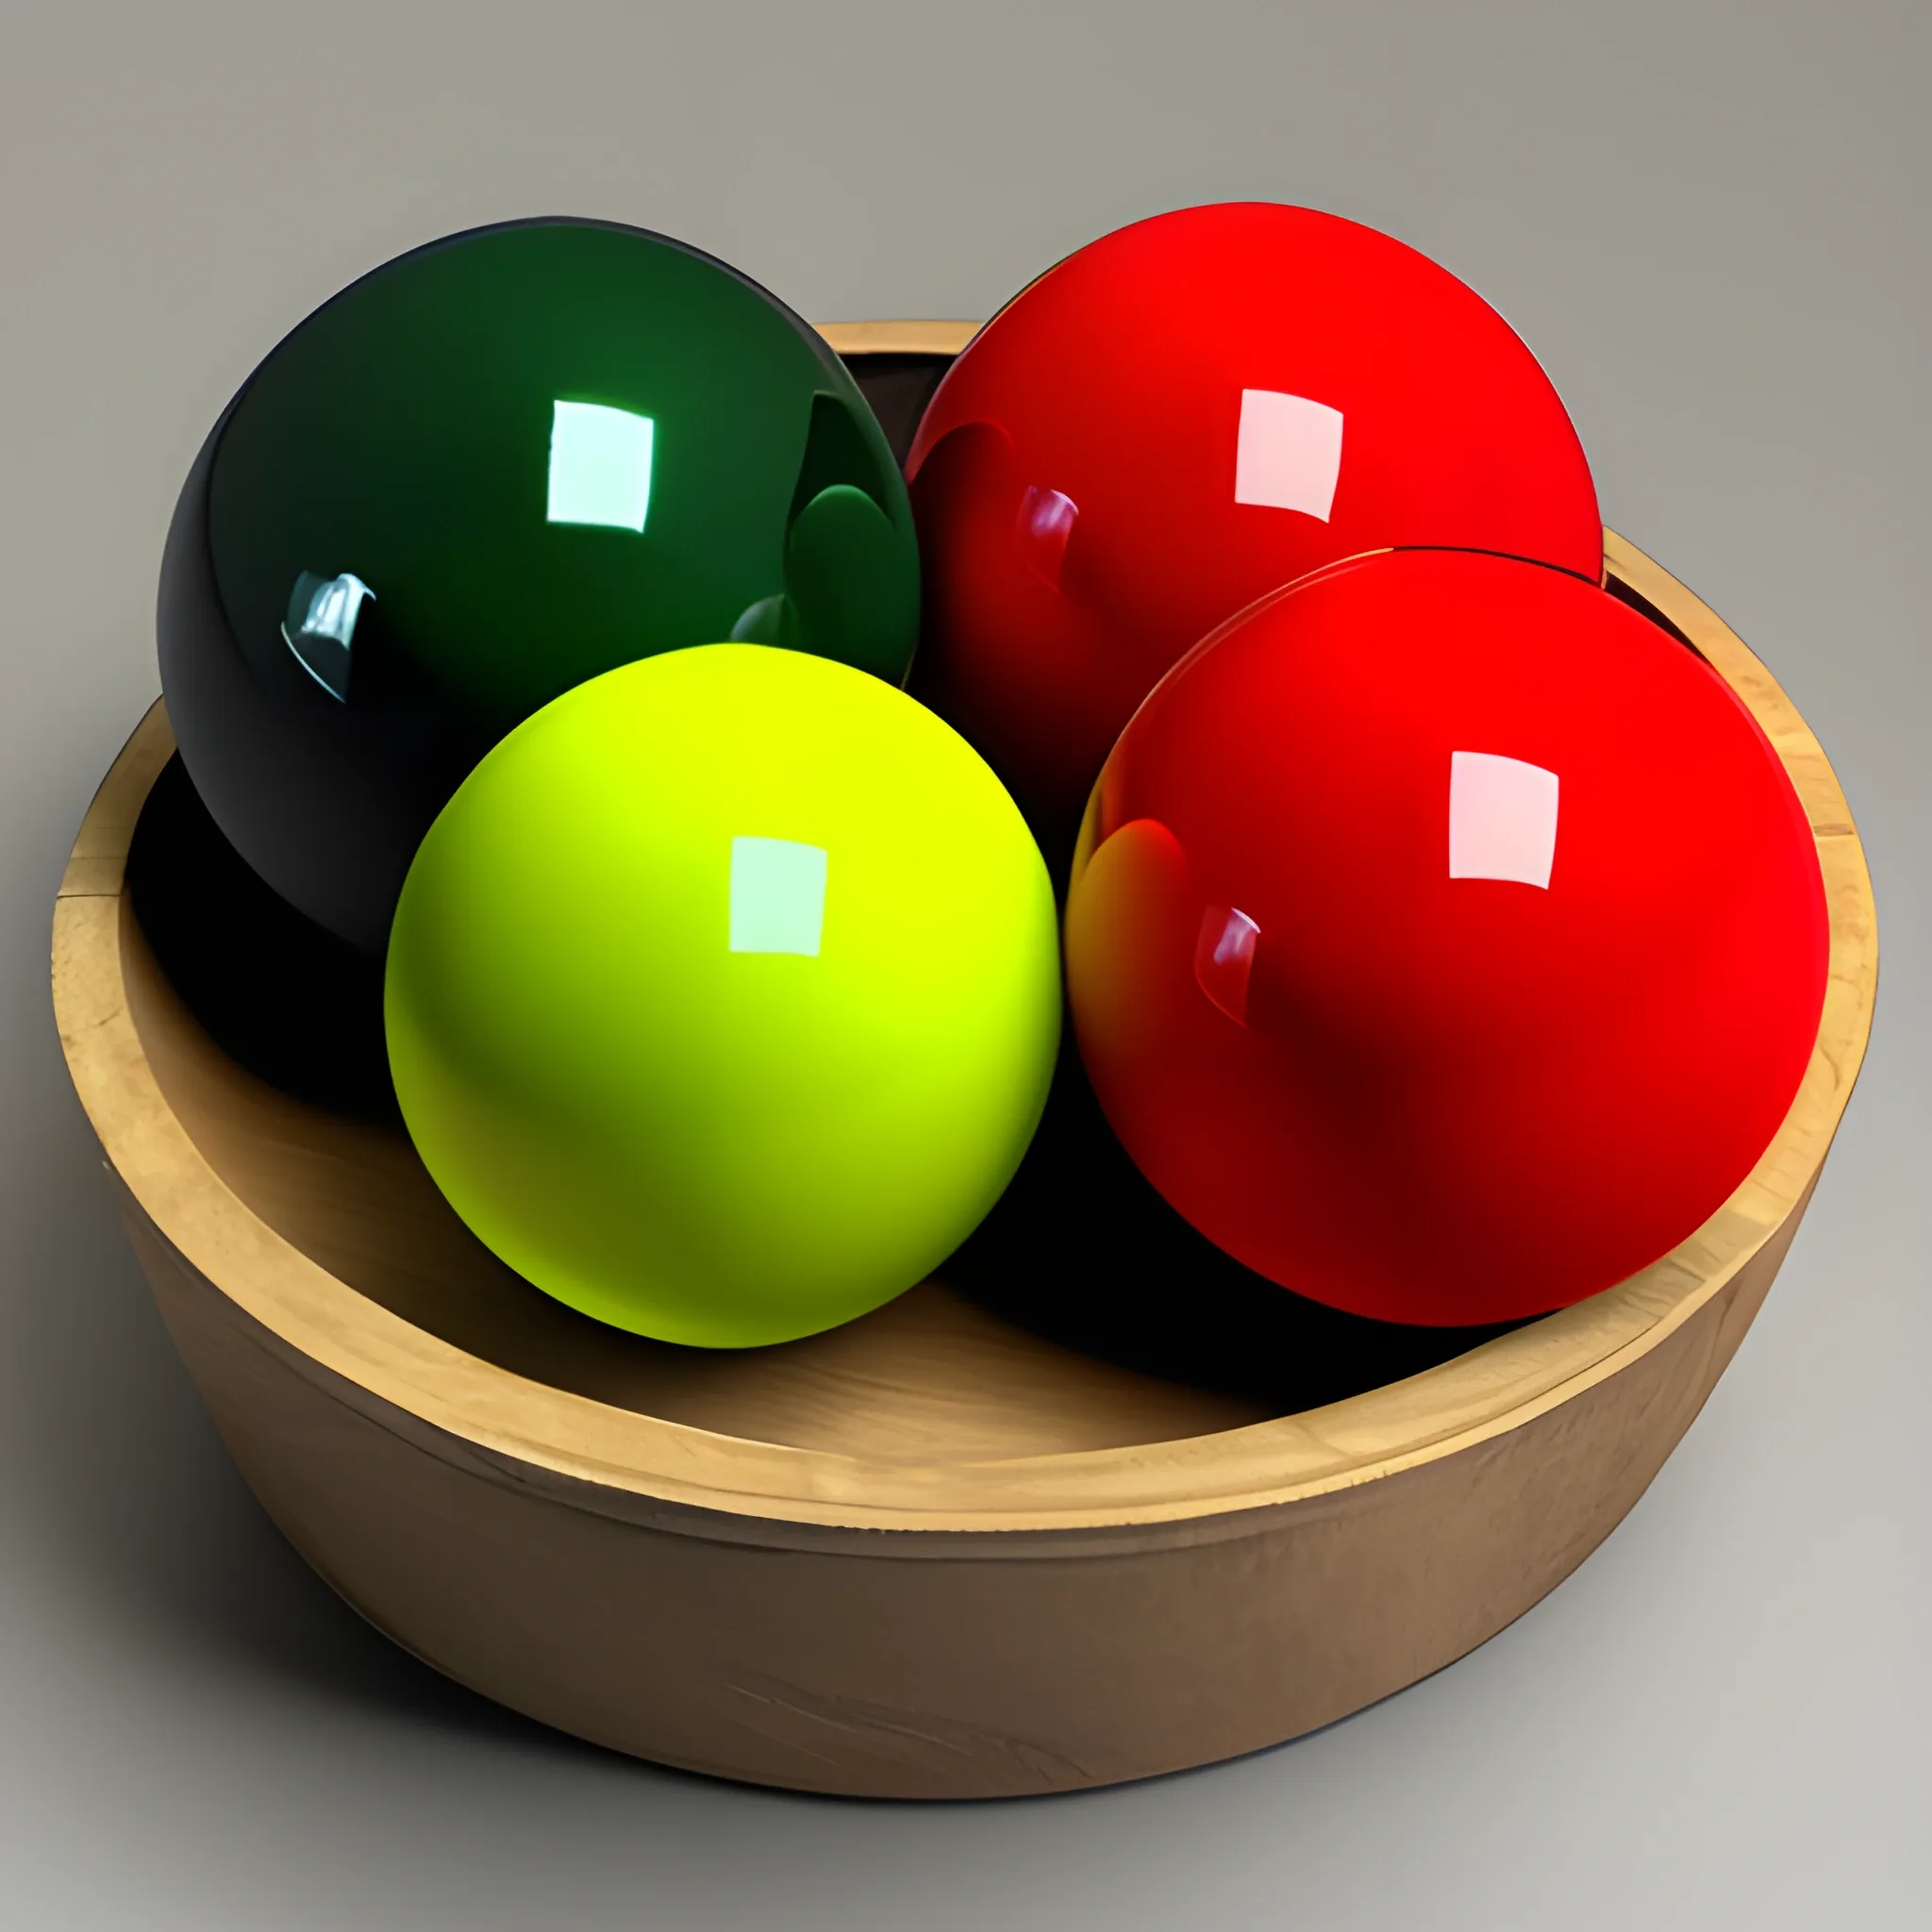 3 balls red, yellow and dark green
